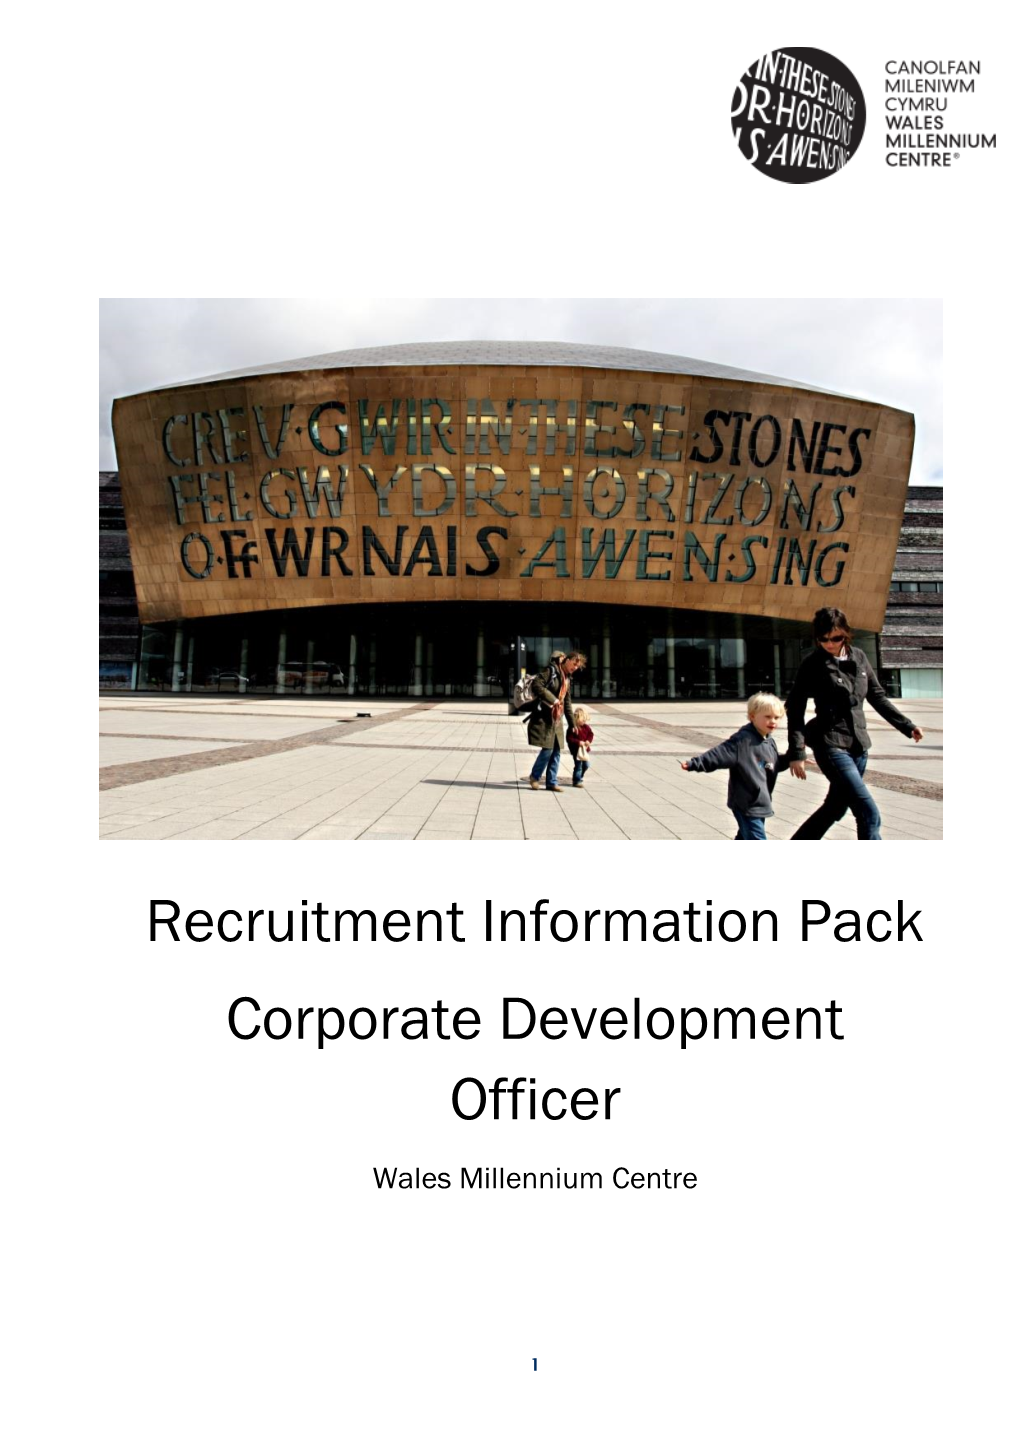 Recruitment Information Pack Corporate Development Officer